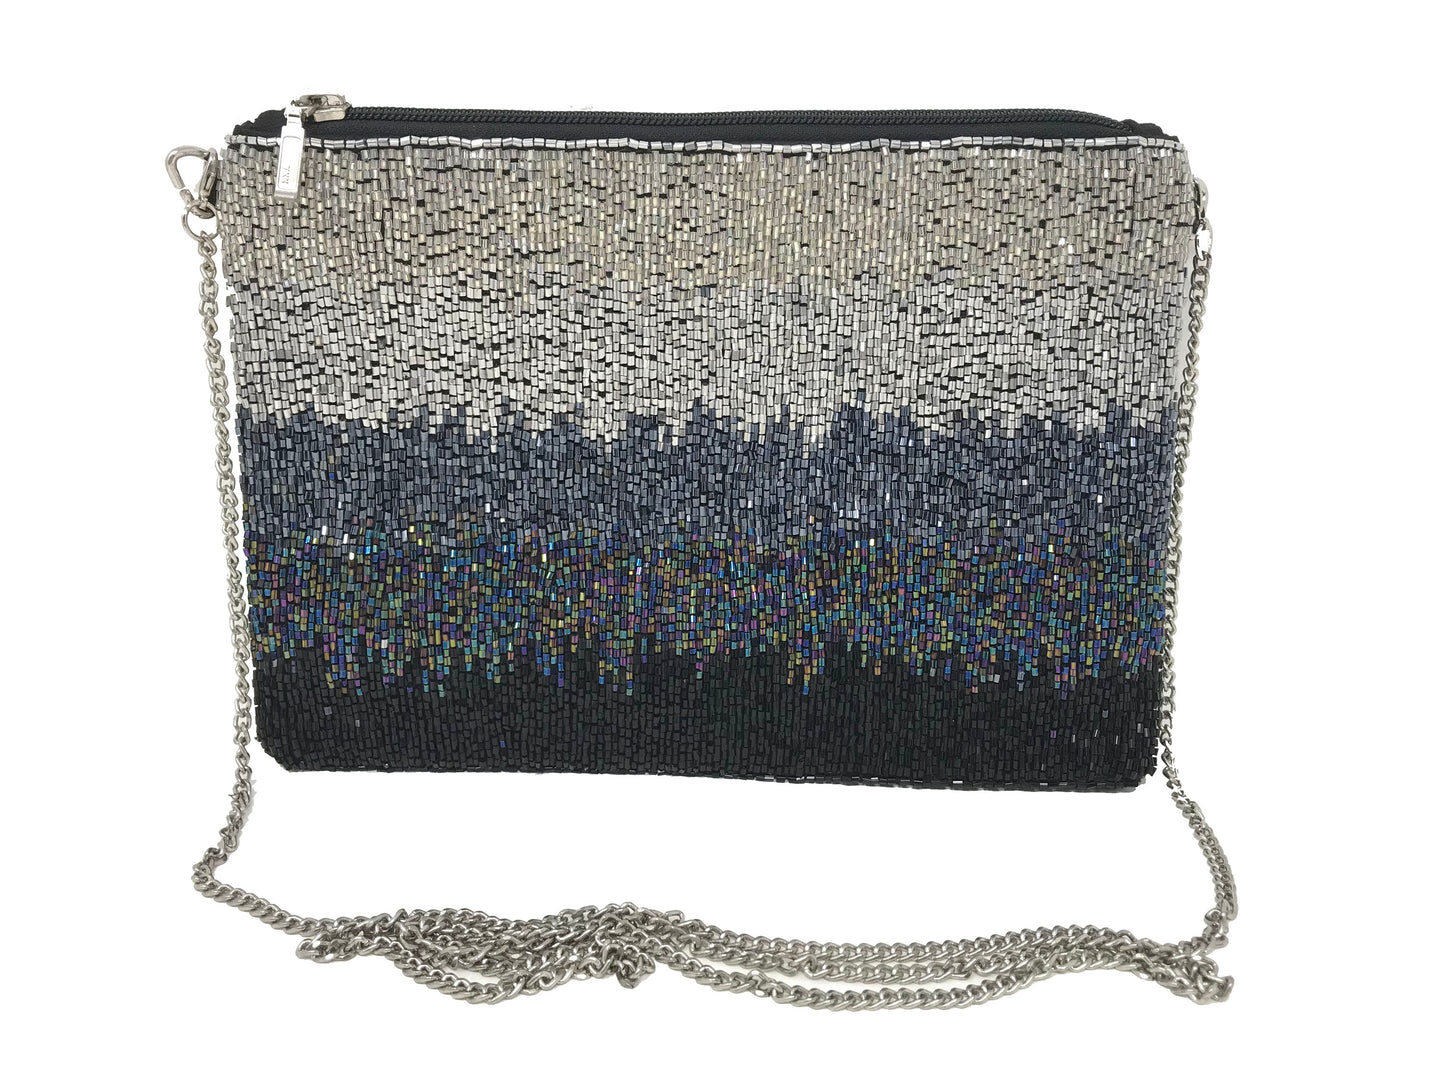 Kay Lee New York Beaded Evening Handbag / Crossbody with Chain Strap...More Styles Inside